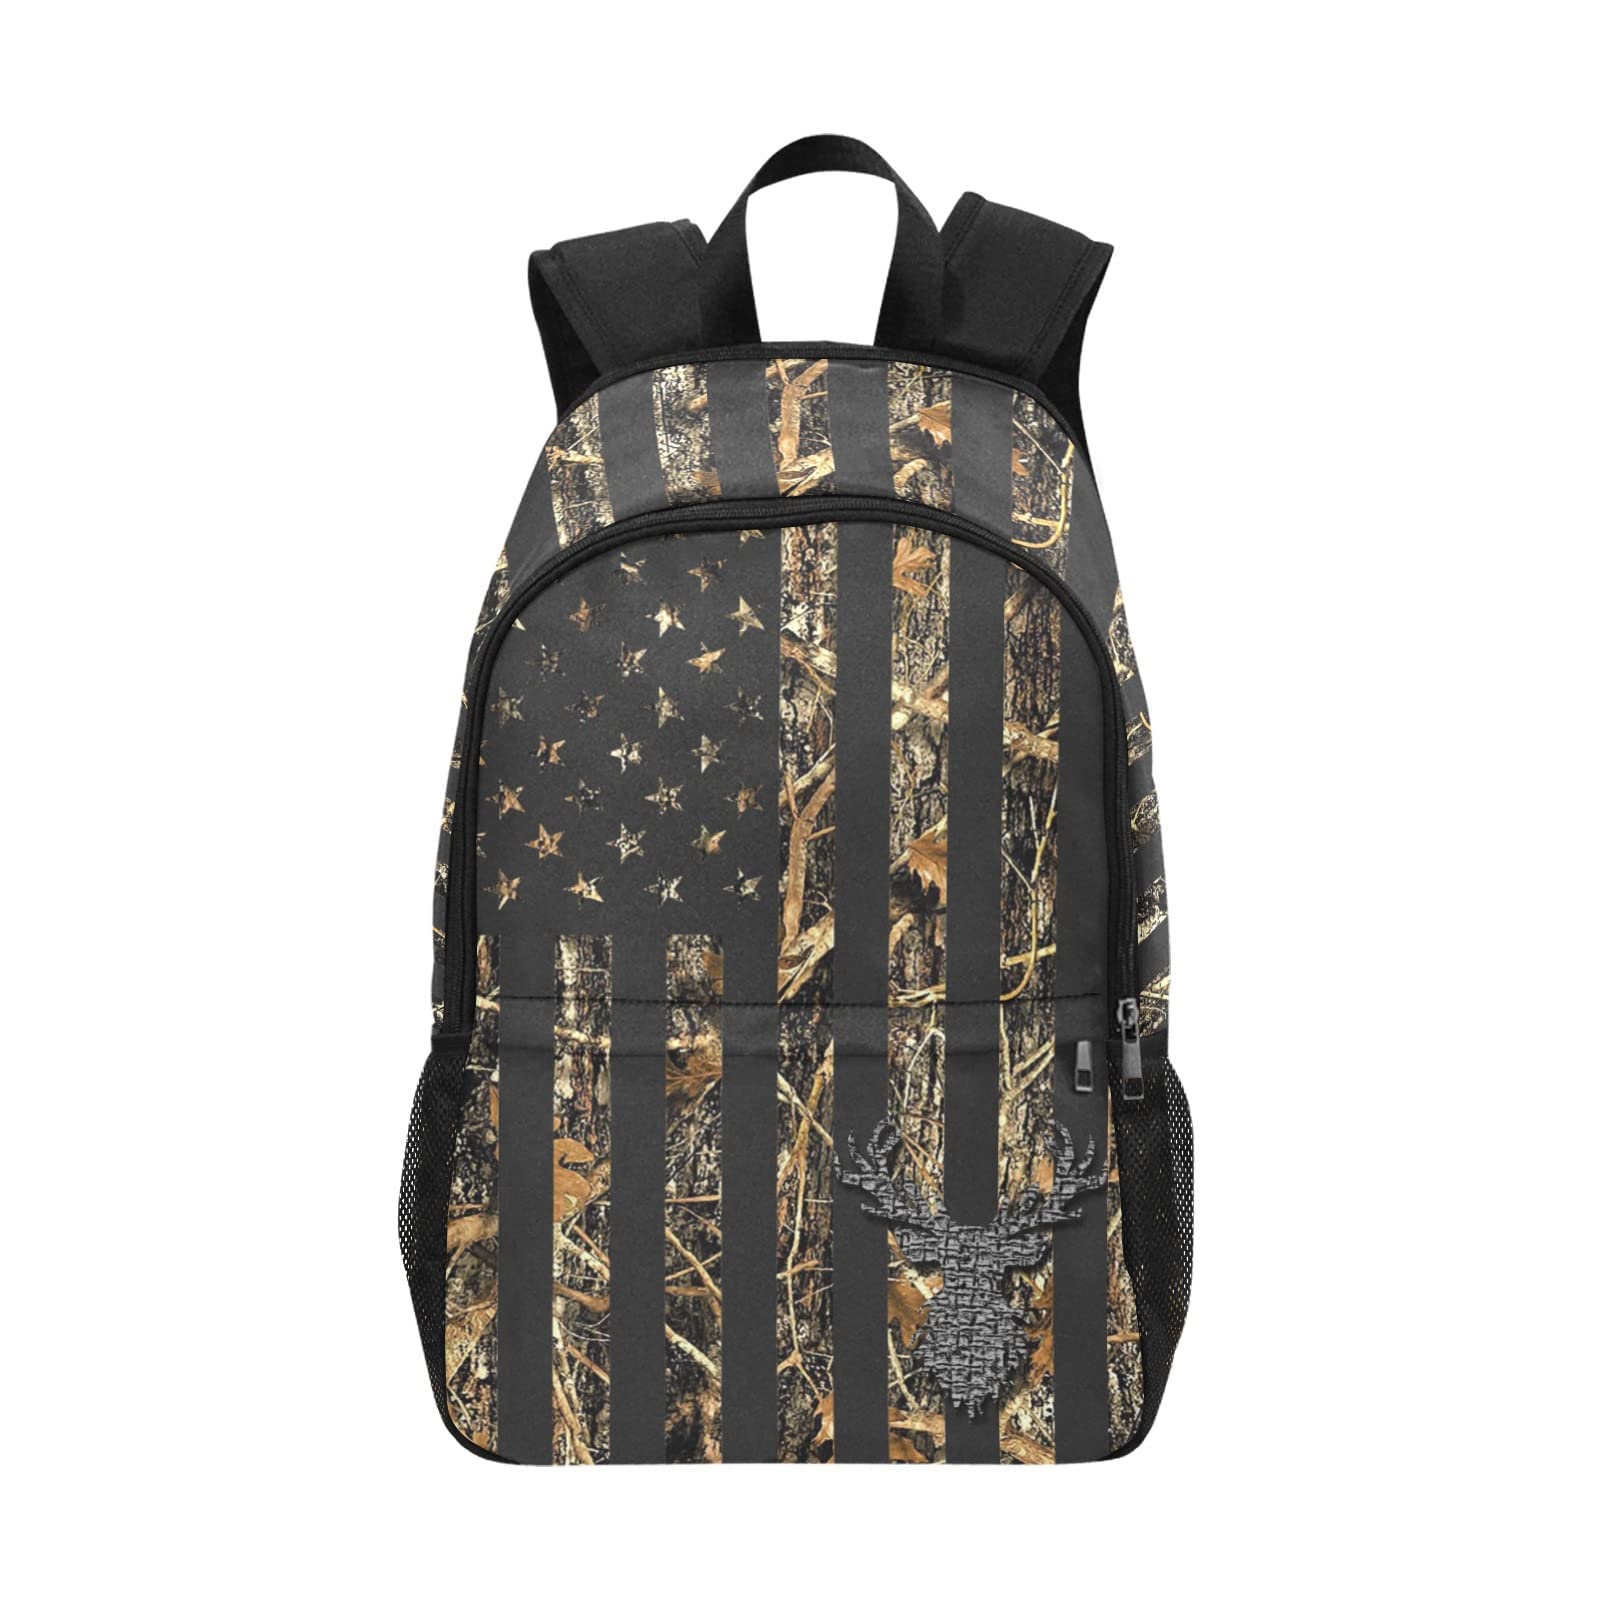 M YESCUSTOM Christmas Deer Leaves Camouflage School Backpack USA Flag Water Resistant Daypack Laptop Backpacks for Students Boys